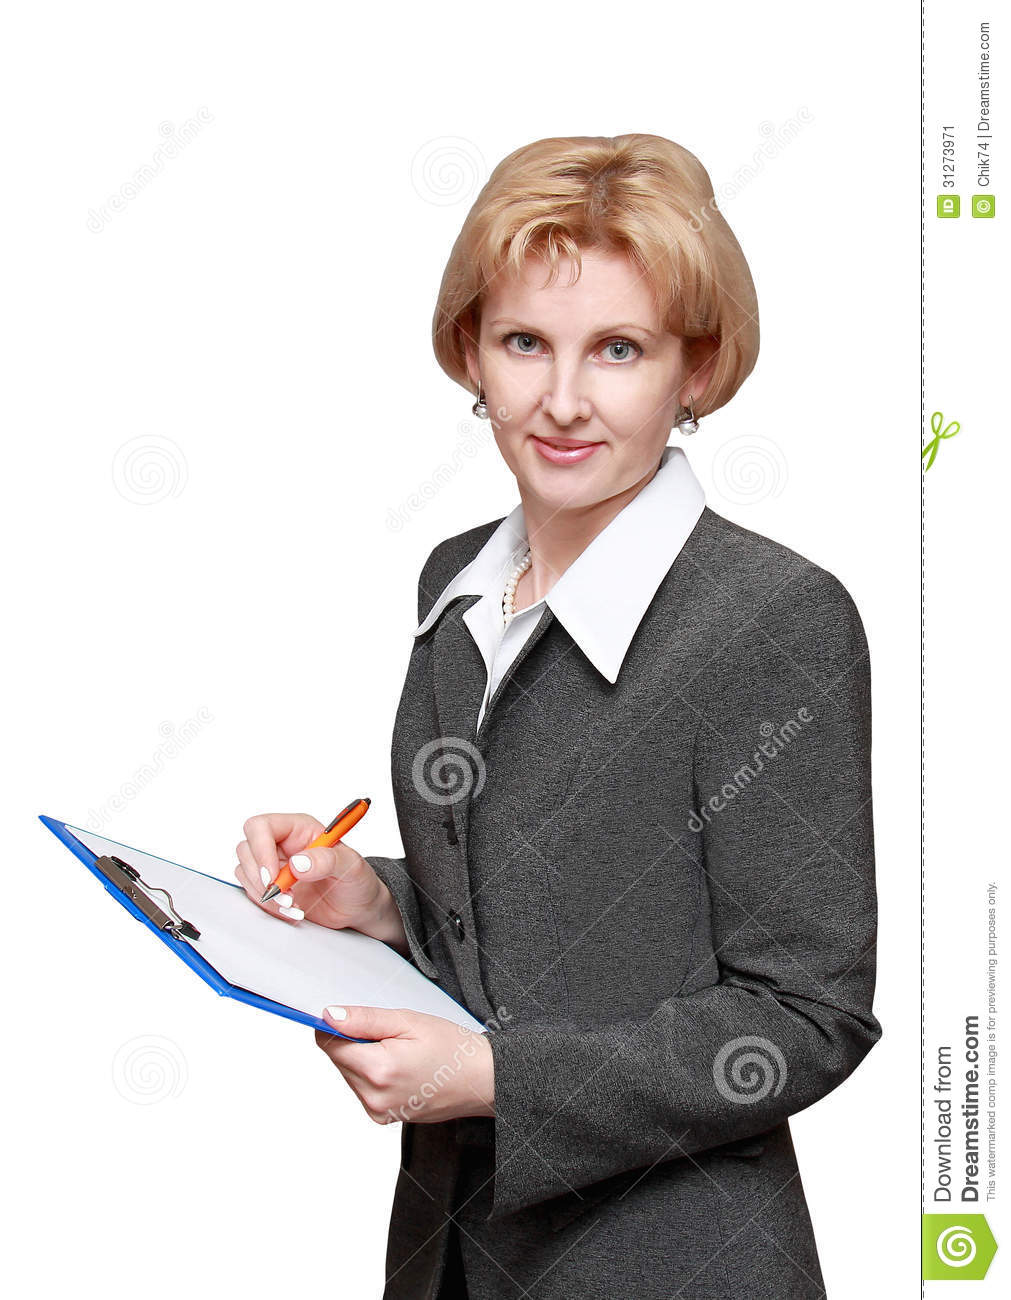 Female Office Worker Isolated On White Background Stock Image   Image    